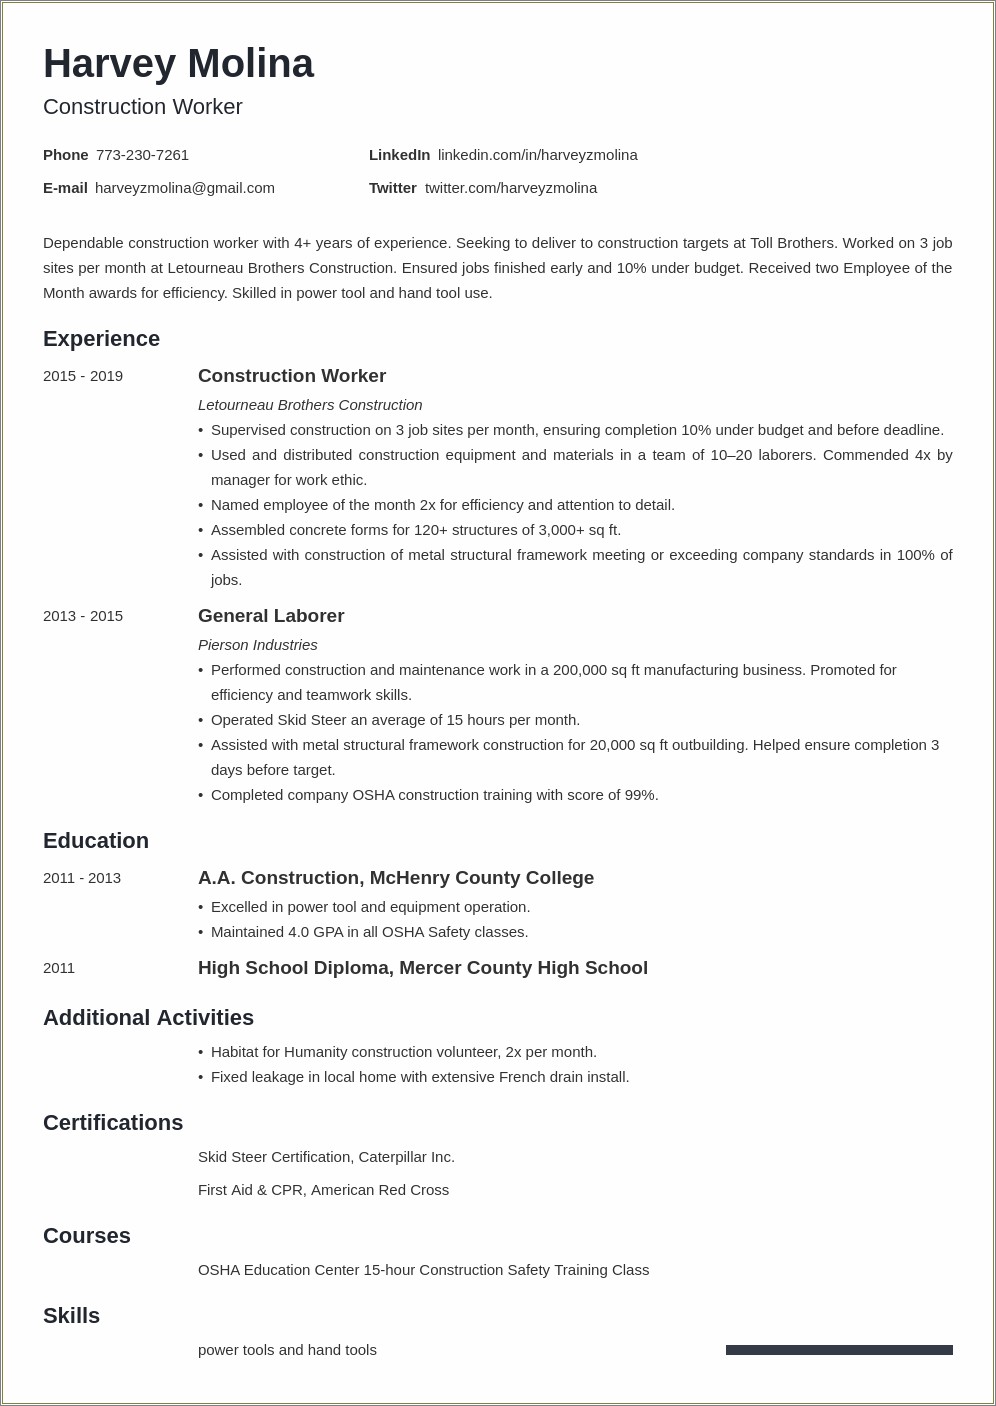 Resume Job Description For Construction Laborer